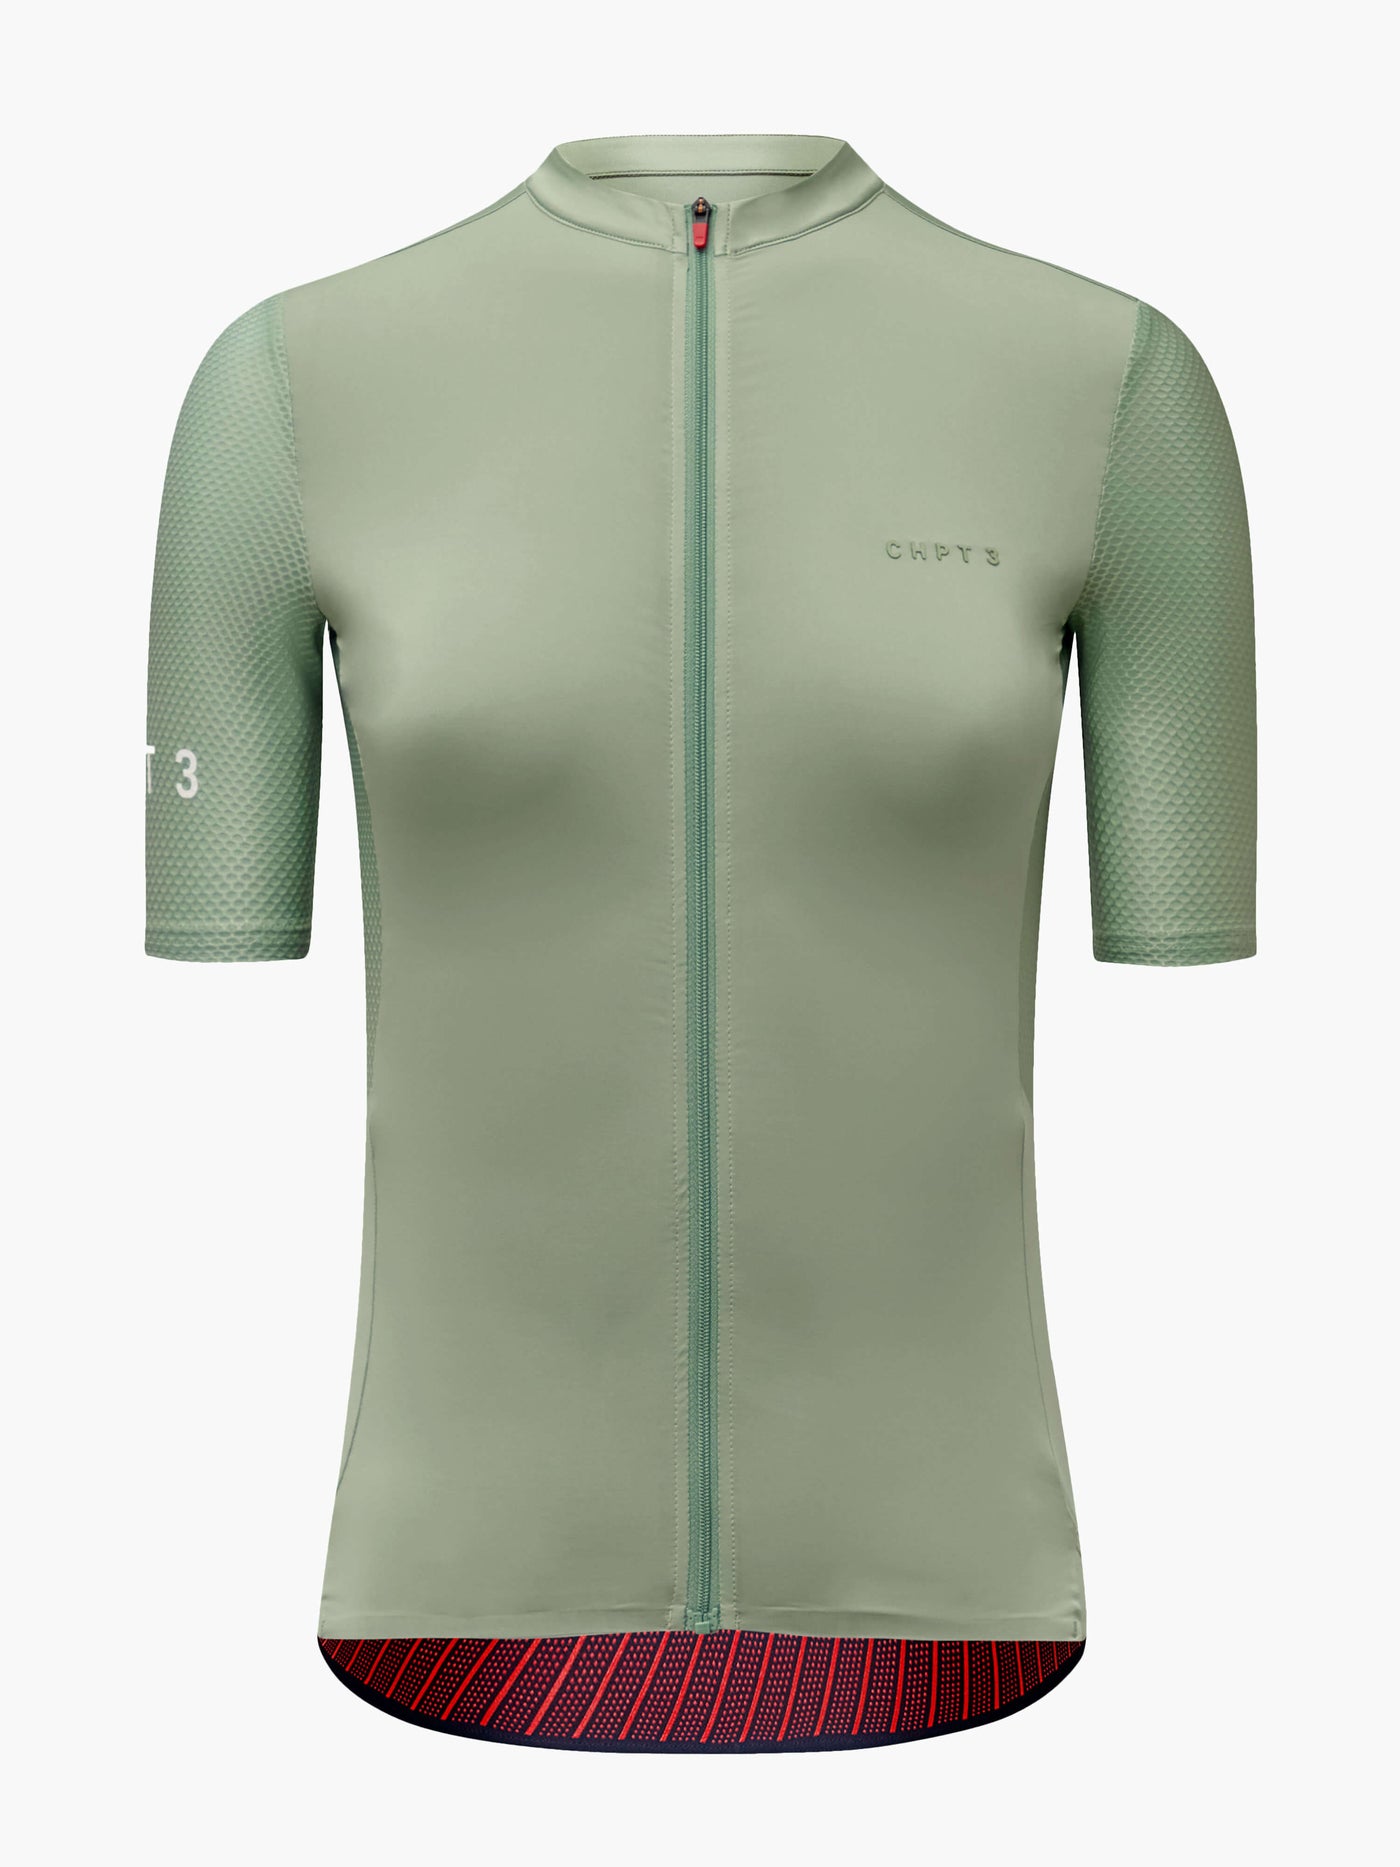 CHPT3 women's short sleeve Aero jersey, in Lichen Green, viewed from front #color_lichen-green